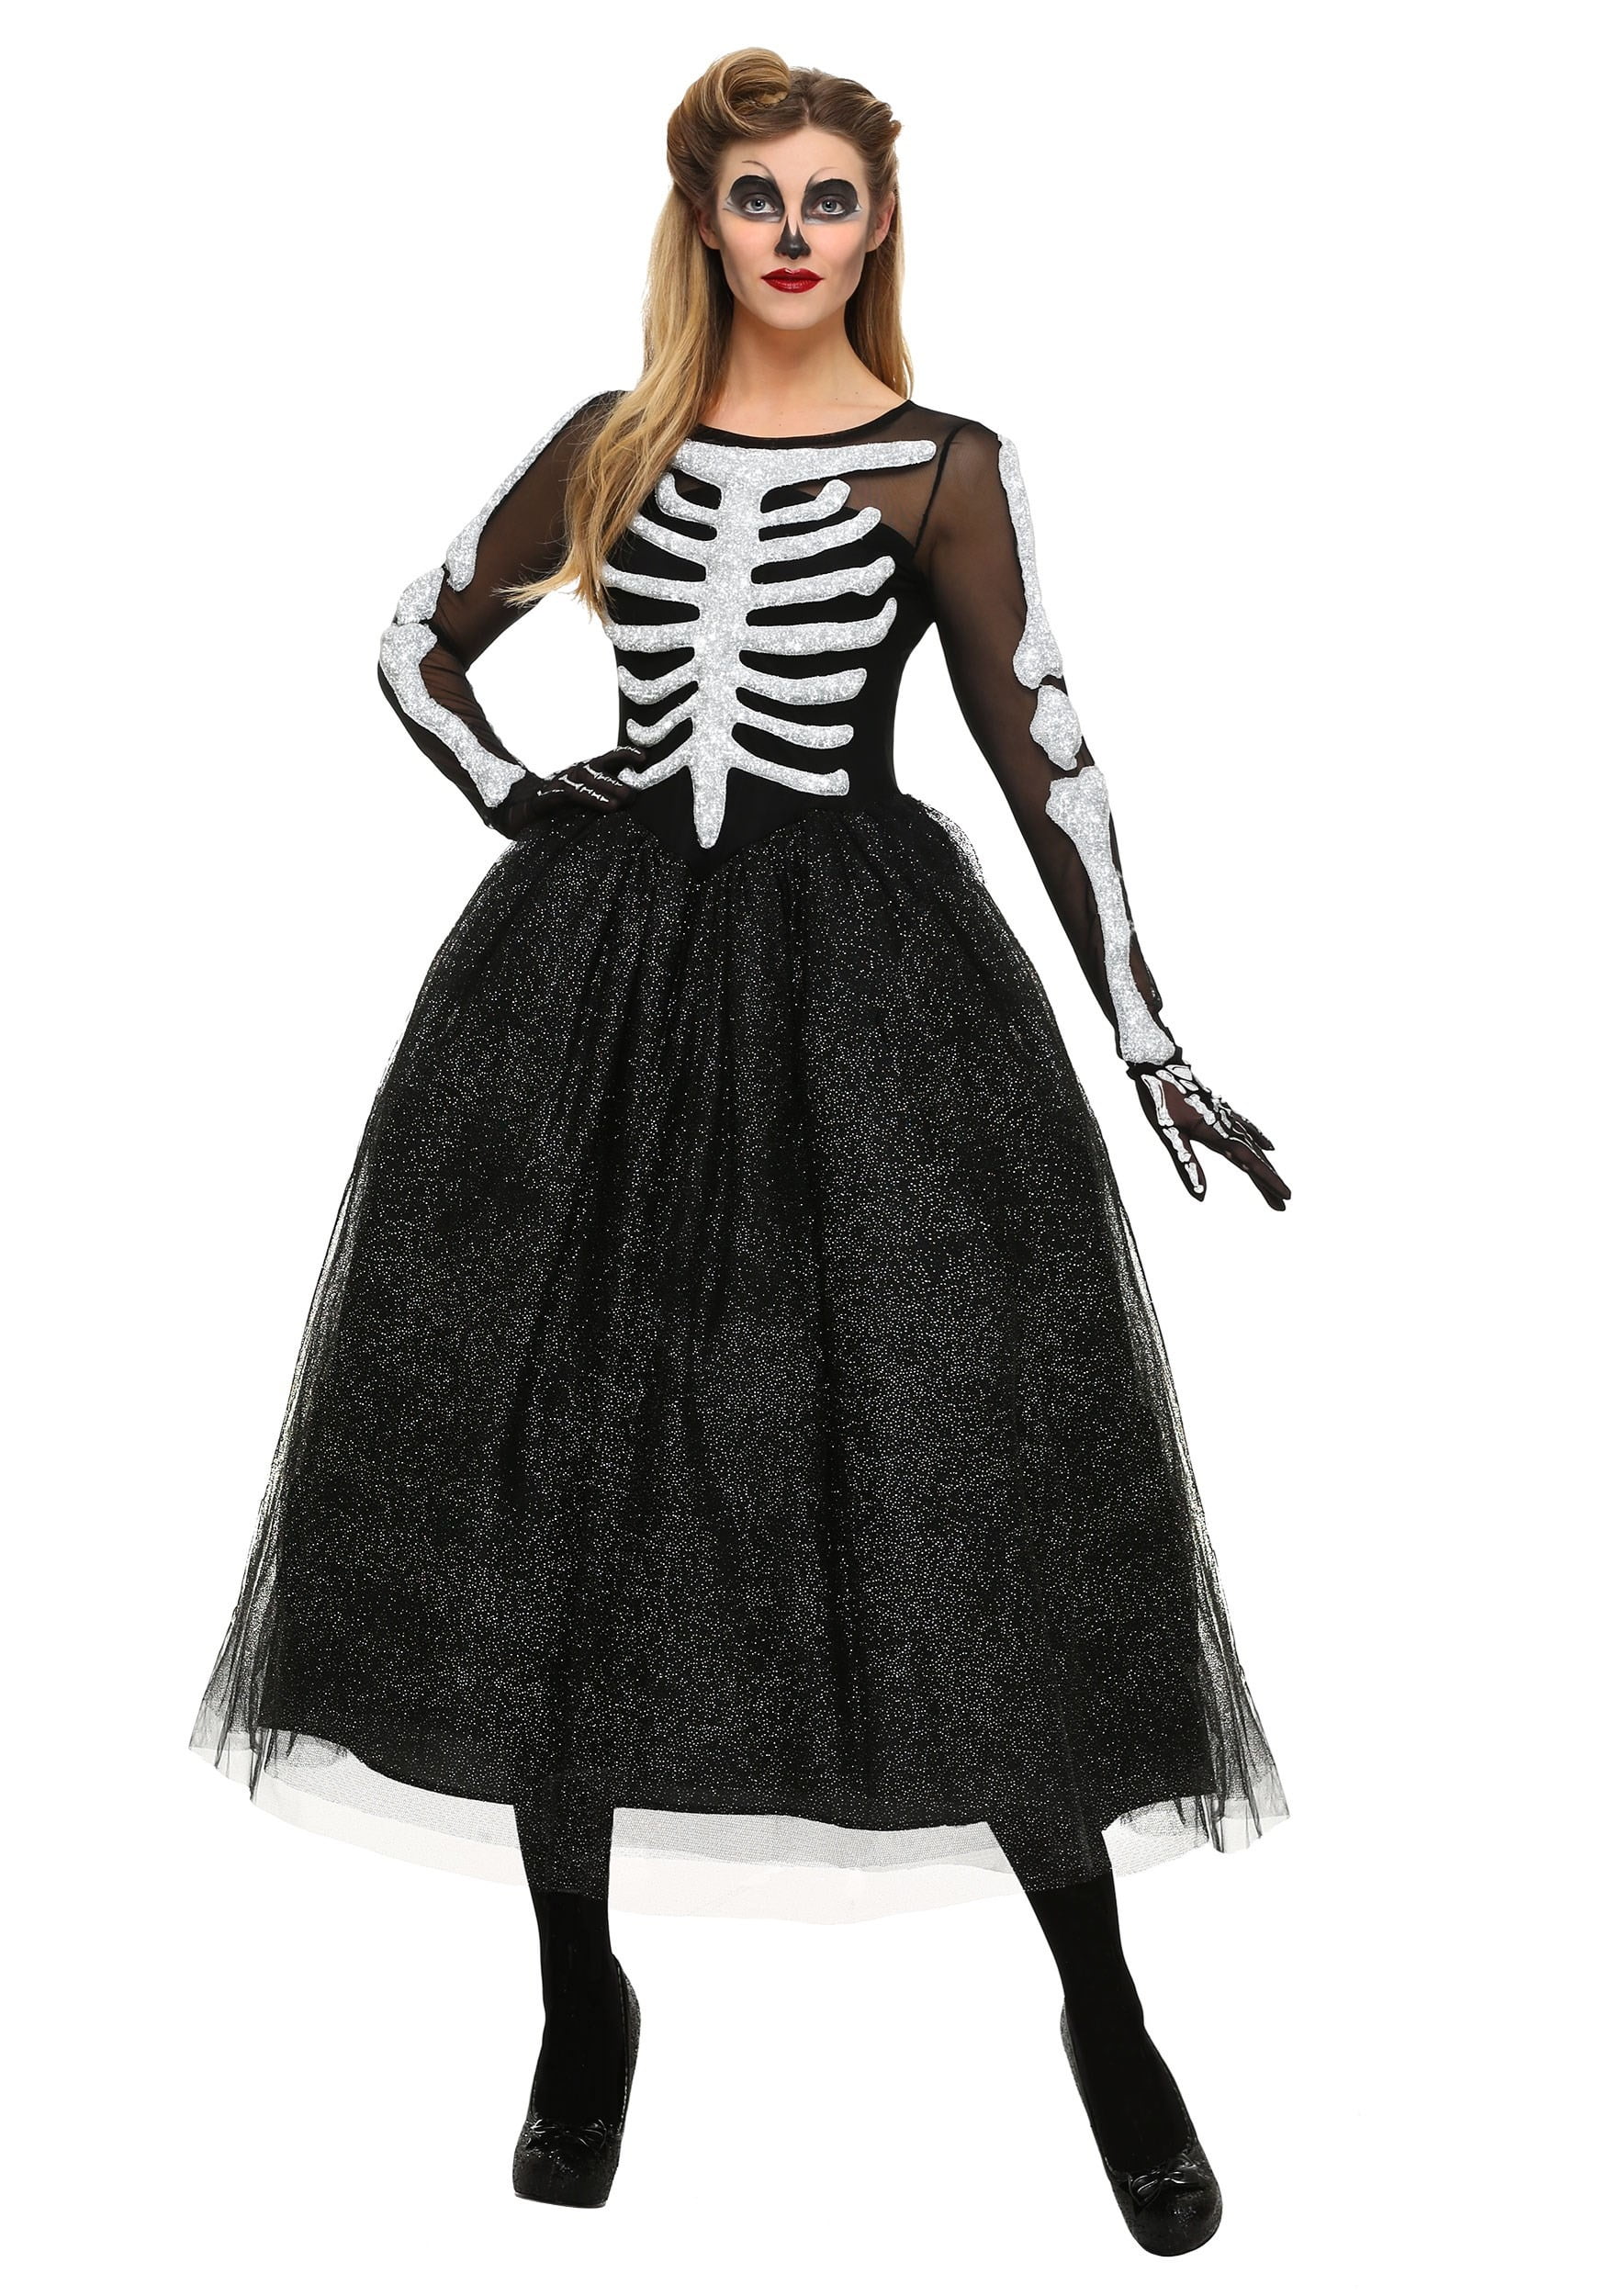 Skeleton Beauty Plus Size Costume - Walmart.com